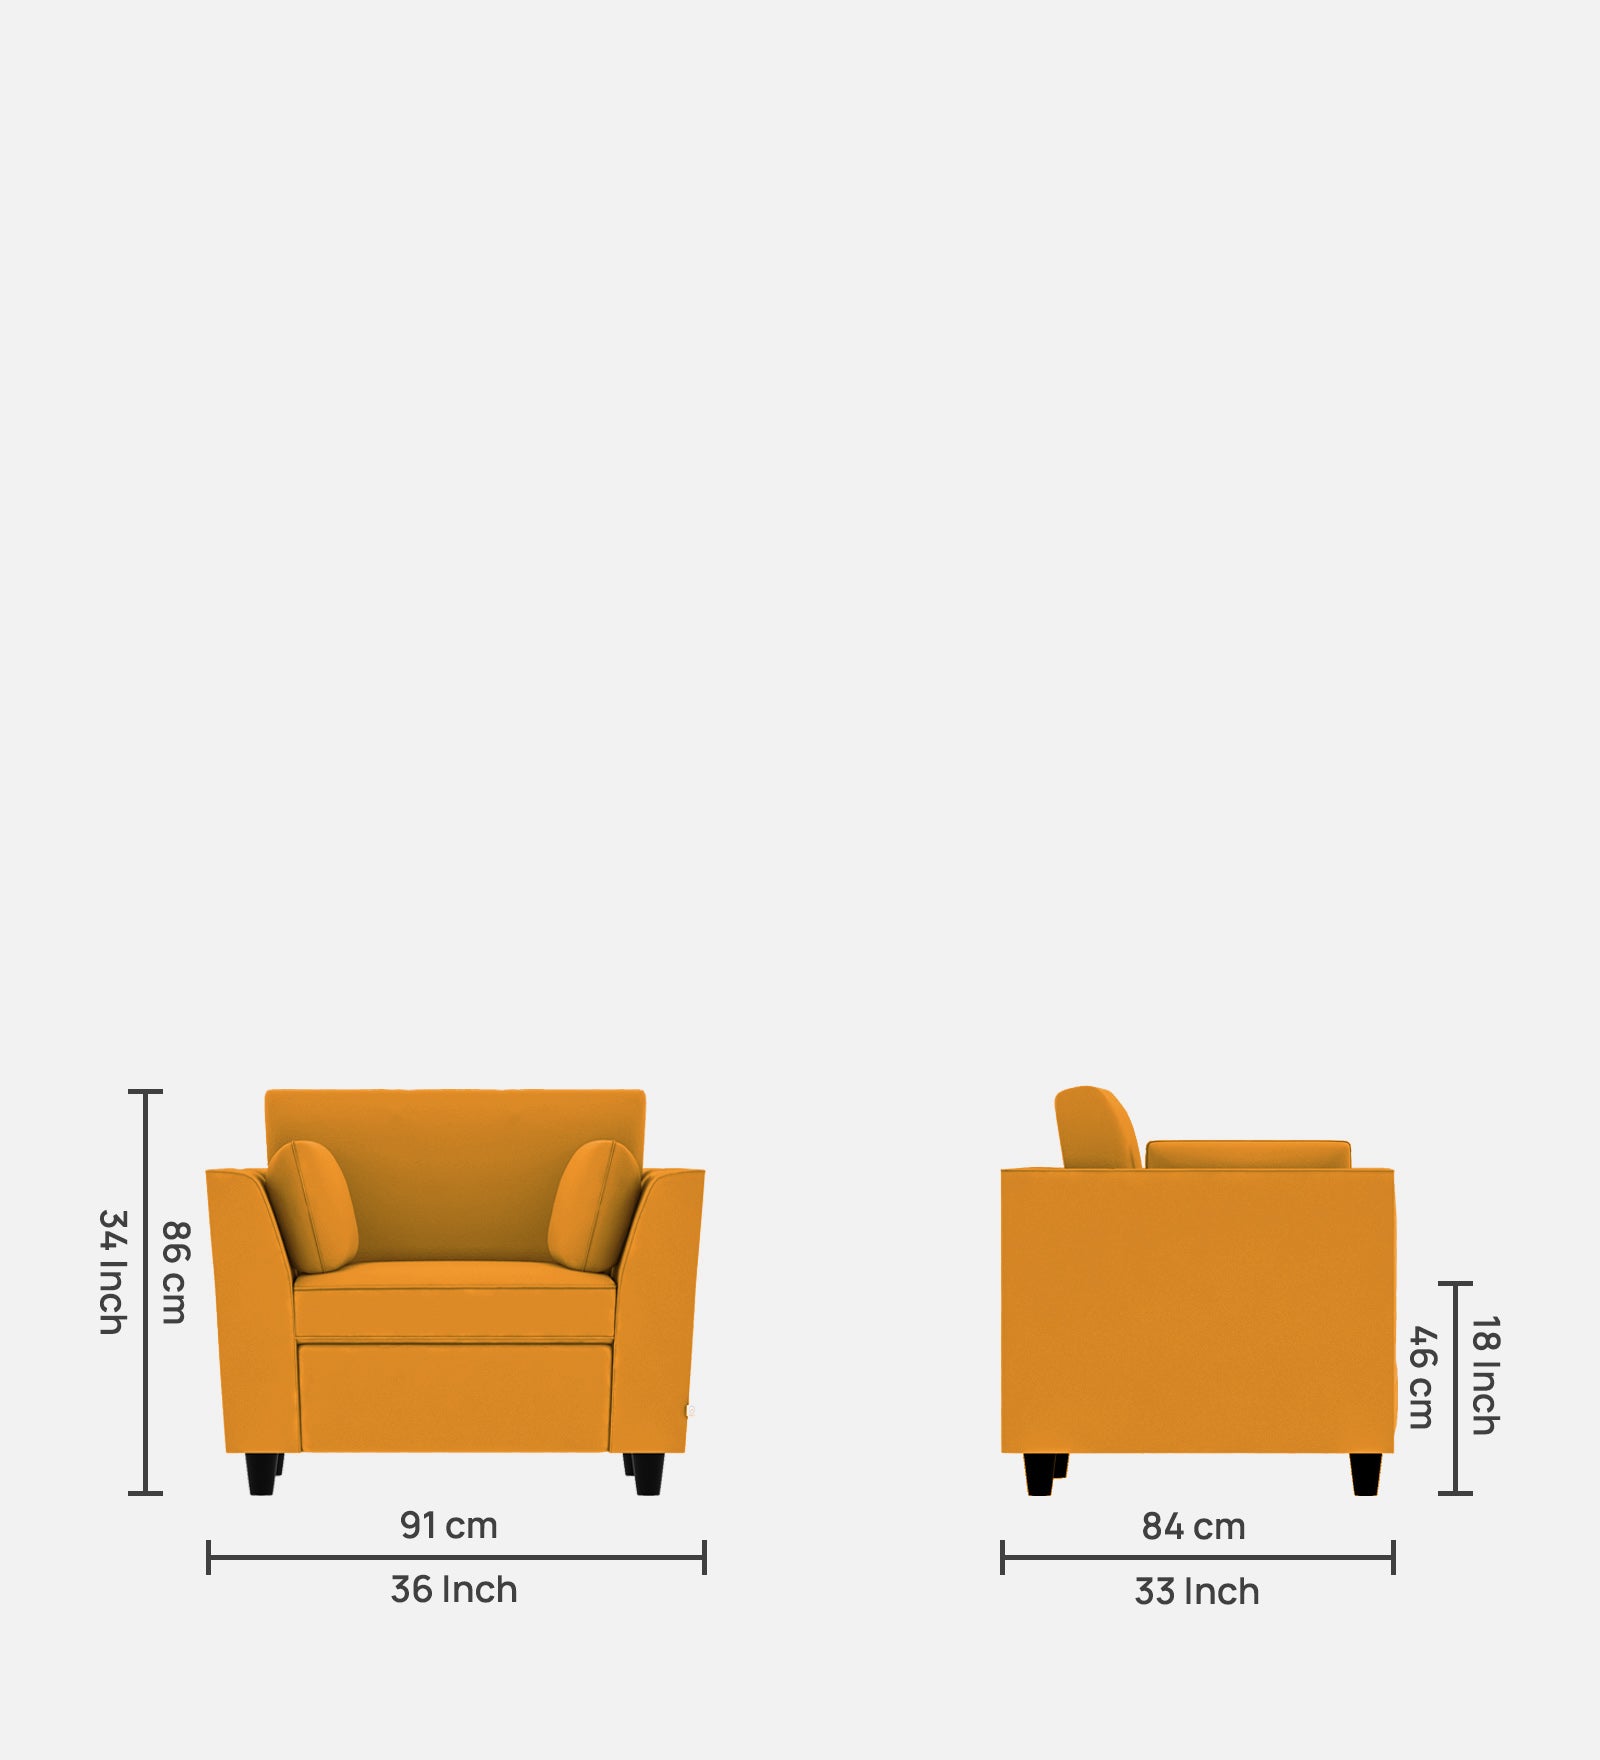 Bristo Velvet 1 Seater Sofa in Safforn Yellow Colour With Storage